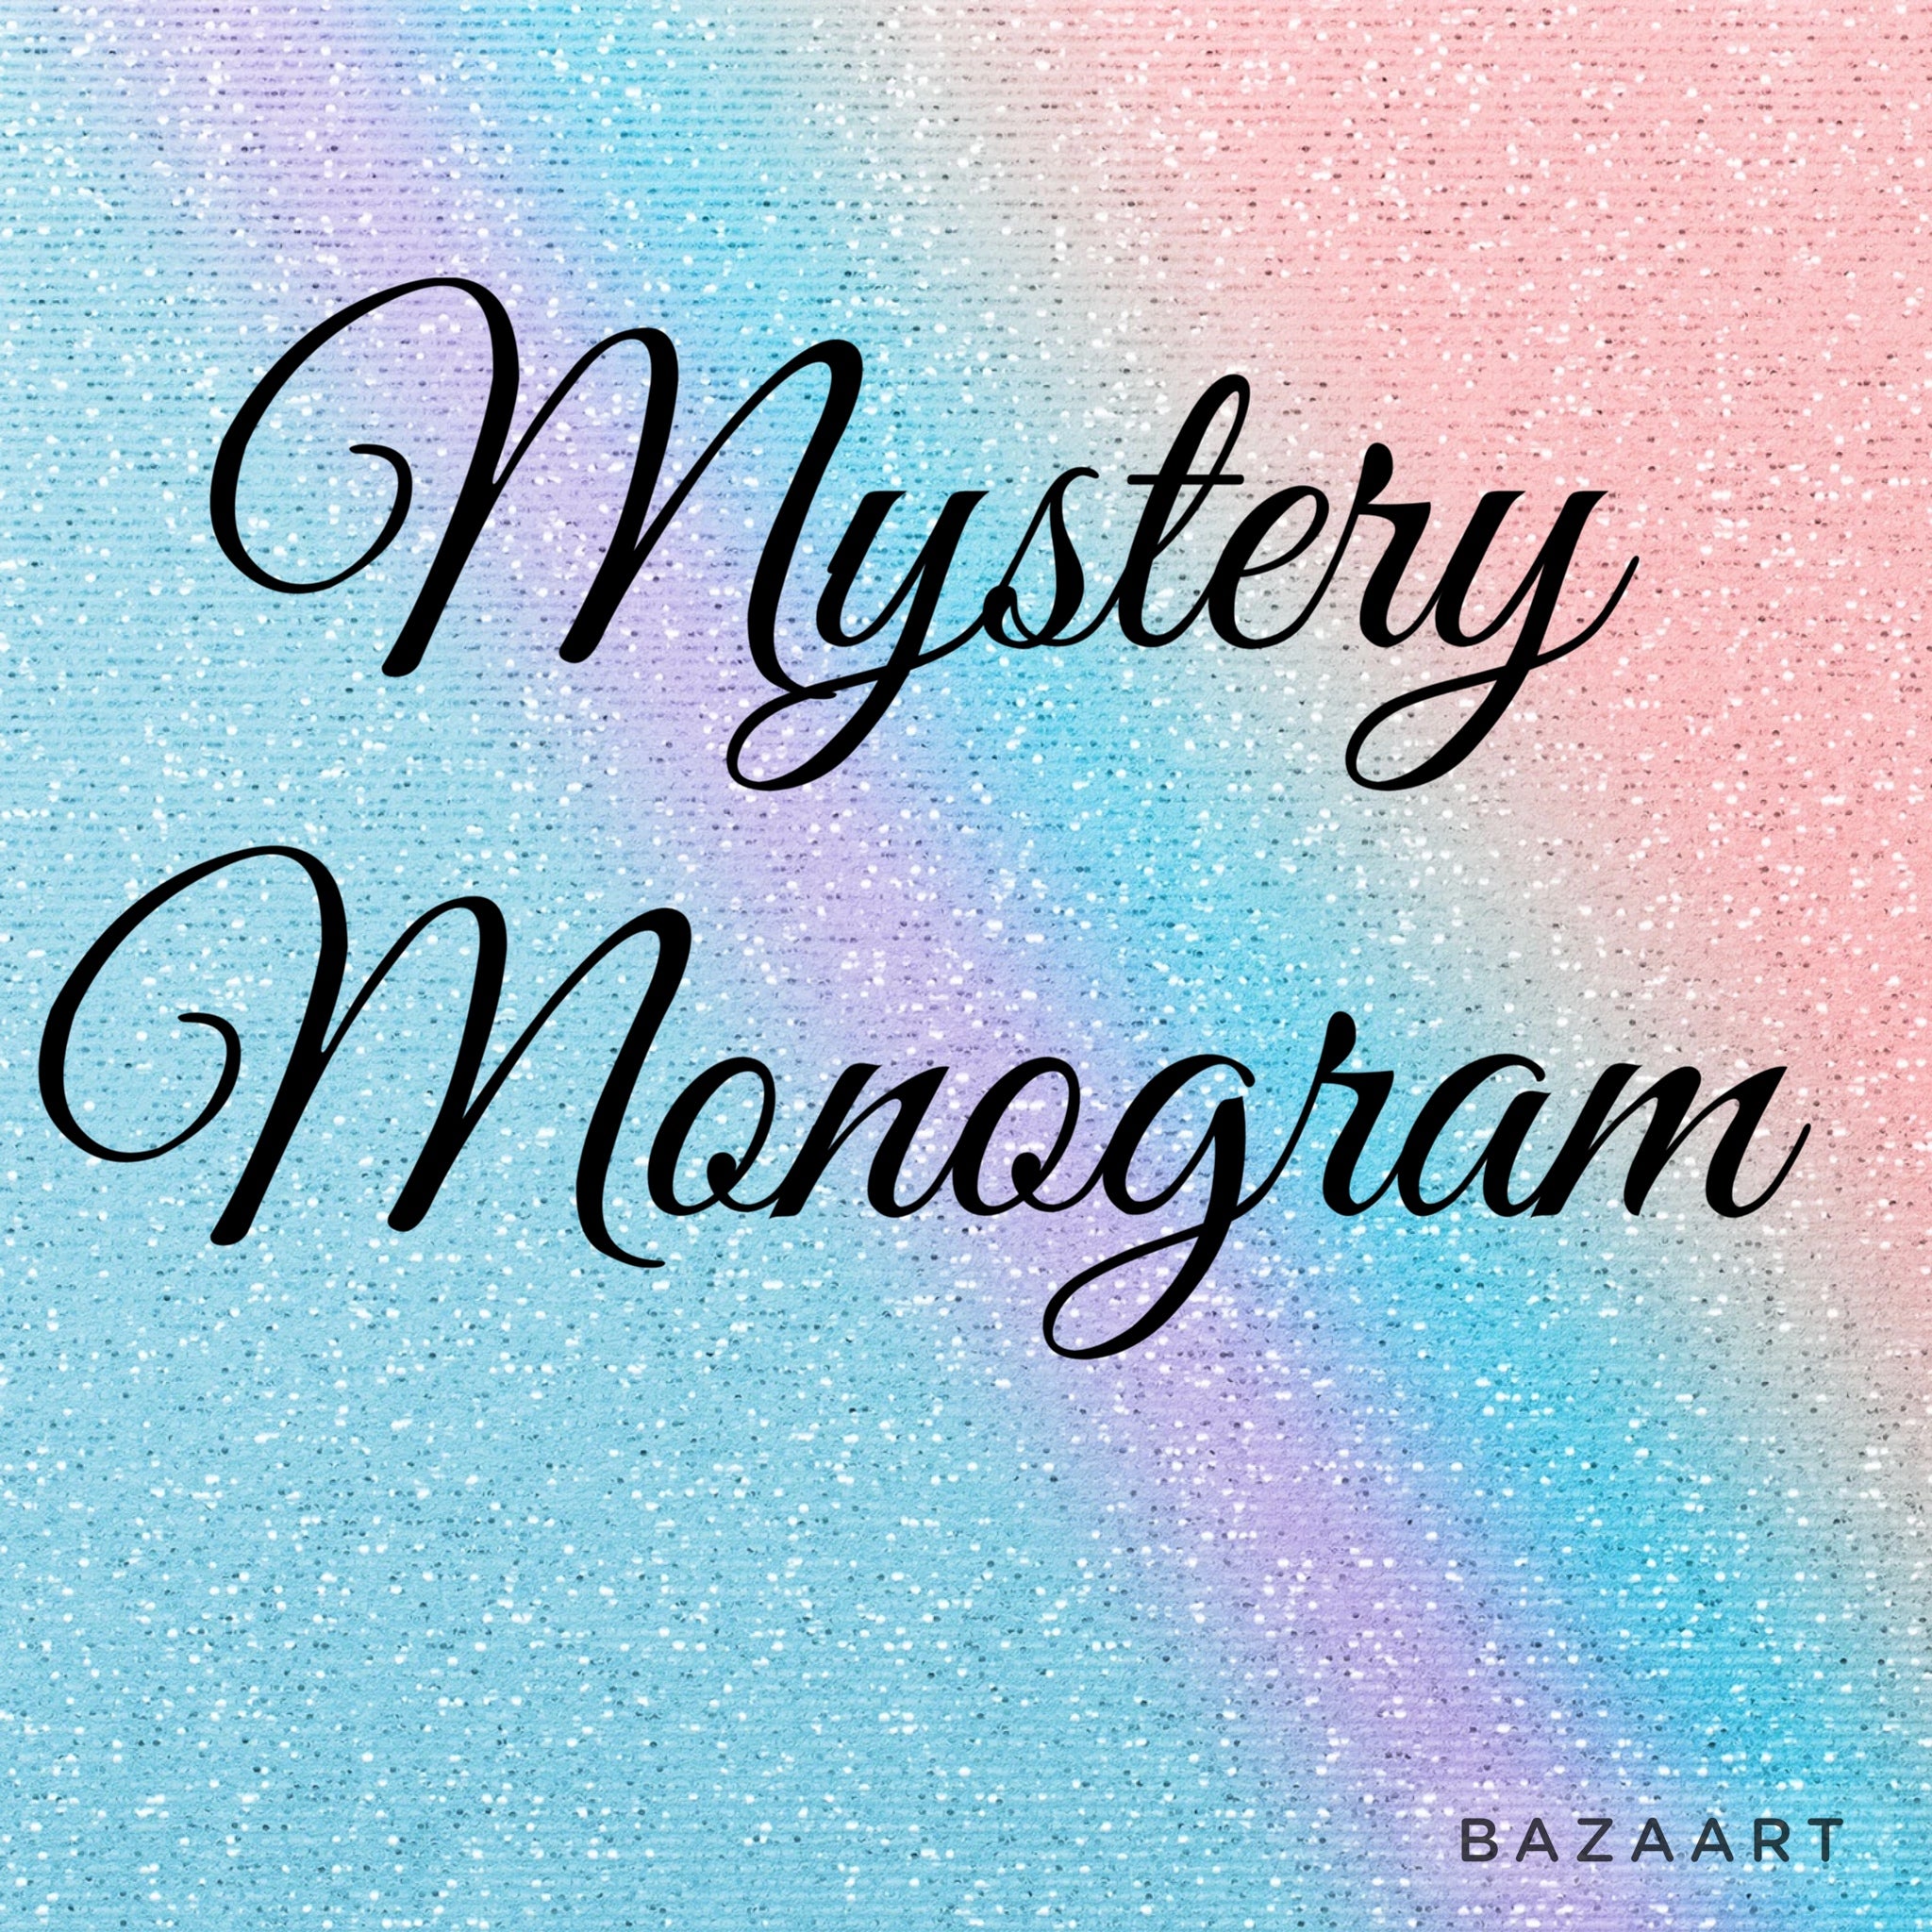 Kids Mystery Monogram